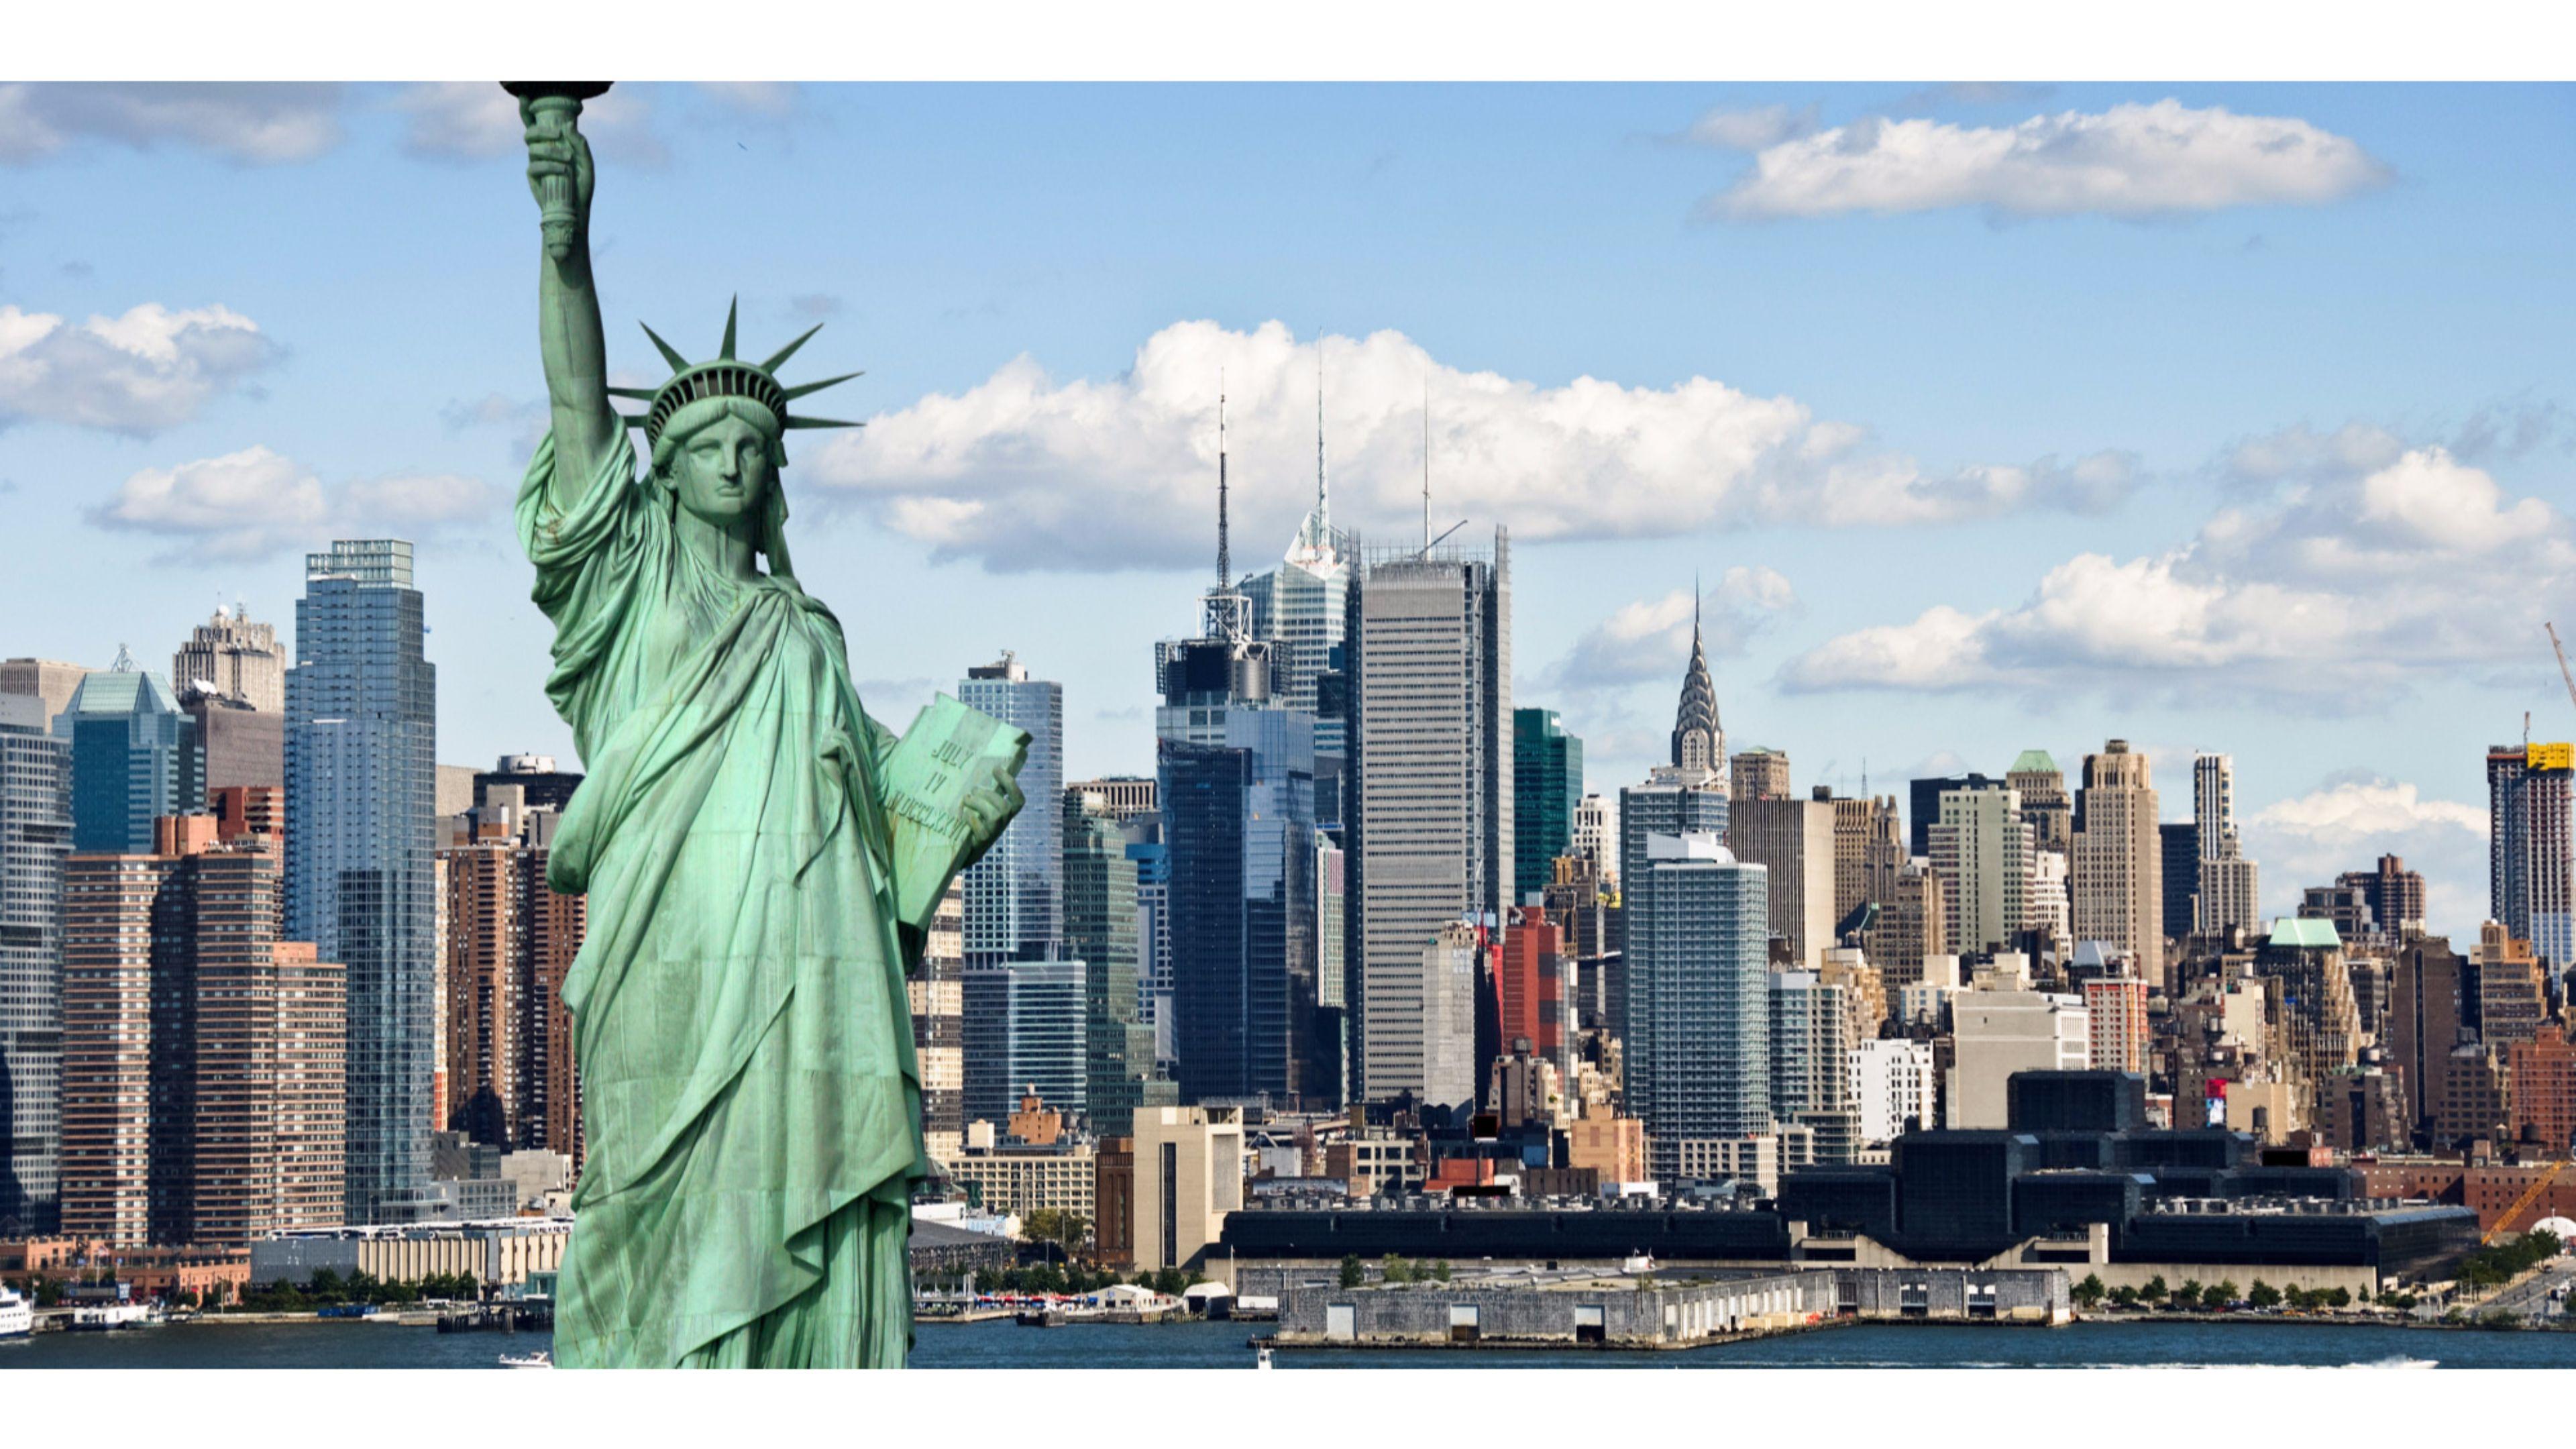 Statue of Liberty New York City 4K Wallpaper. Free 4K Wallpaper